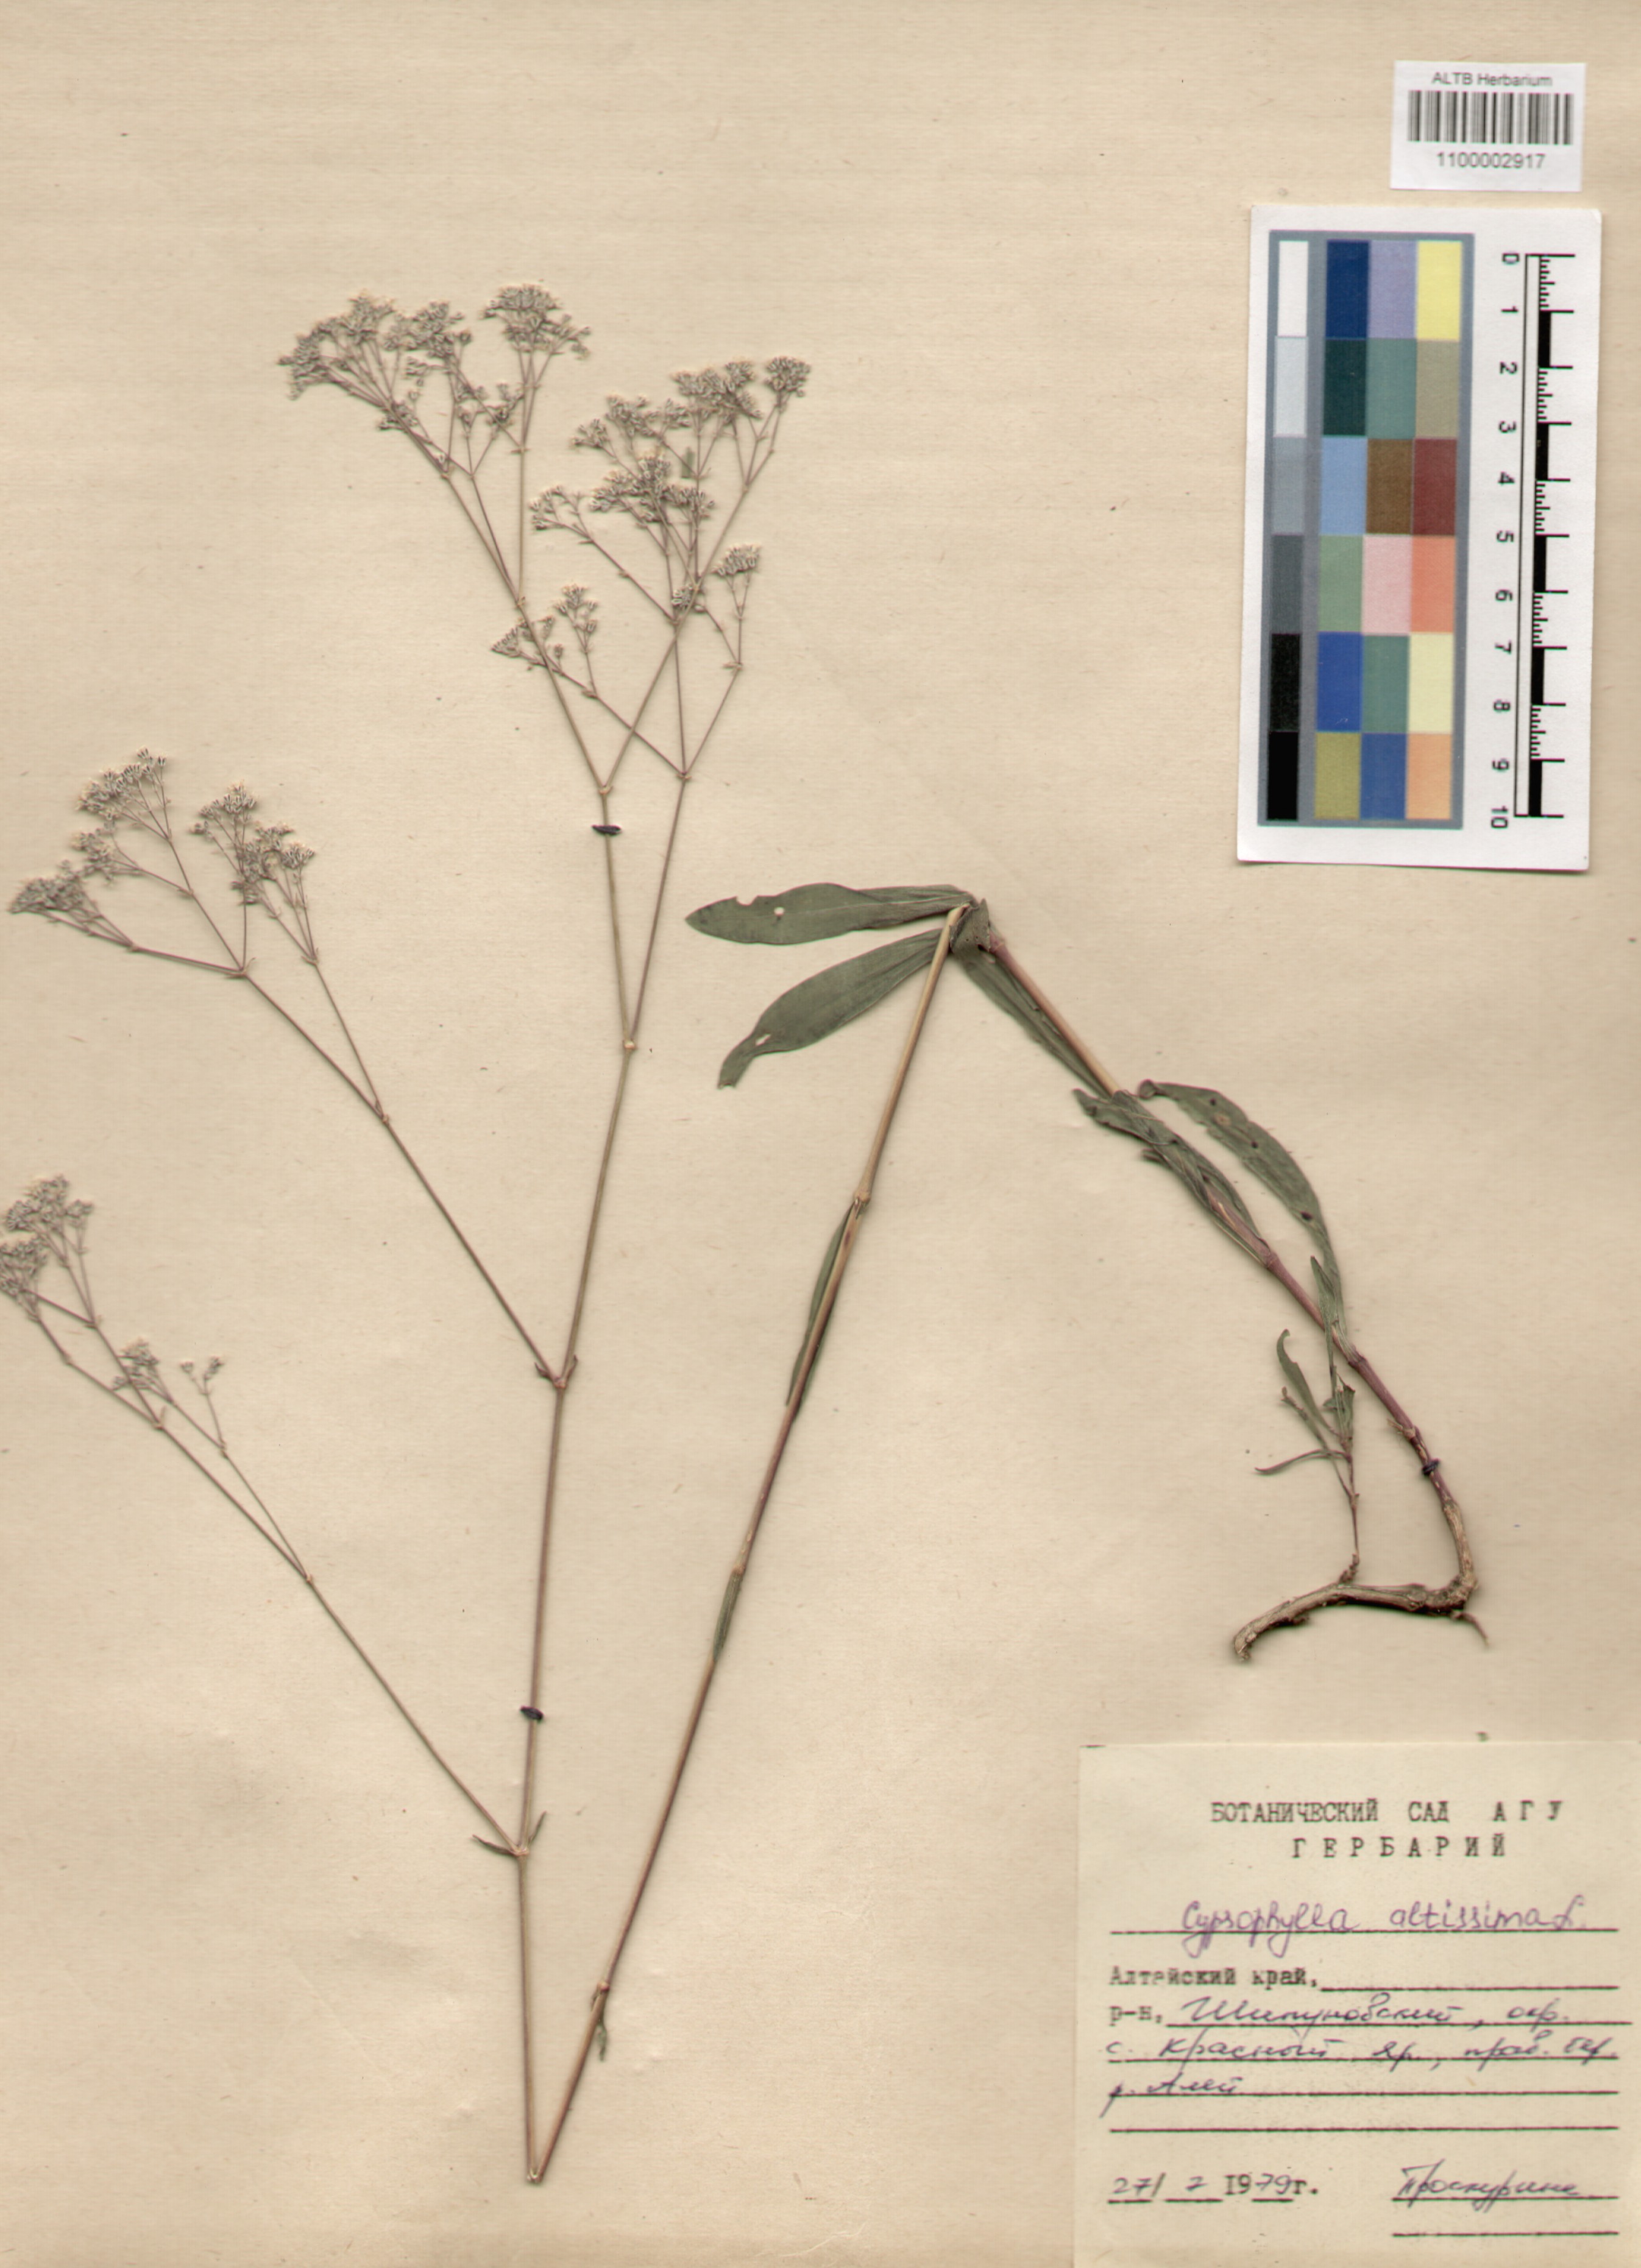 Caryophyllaceae,Gypsophila altissima L.